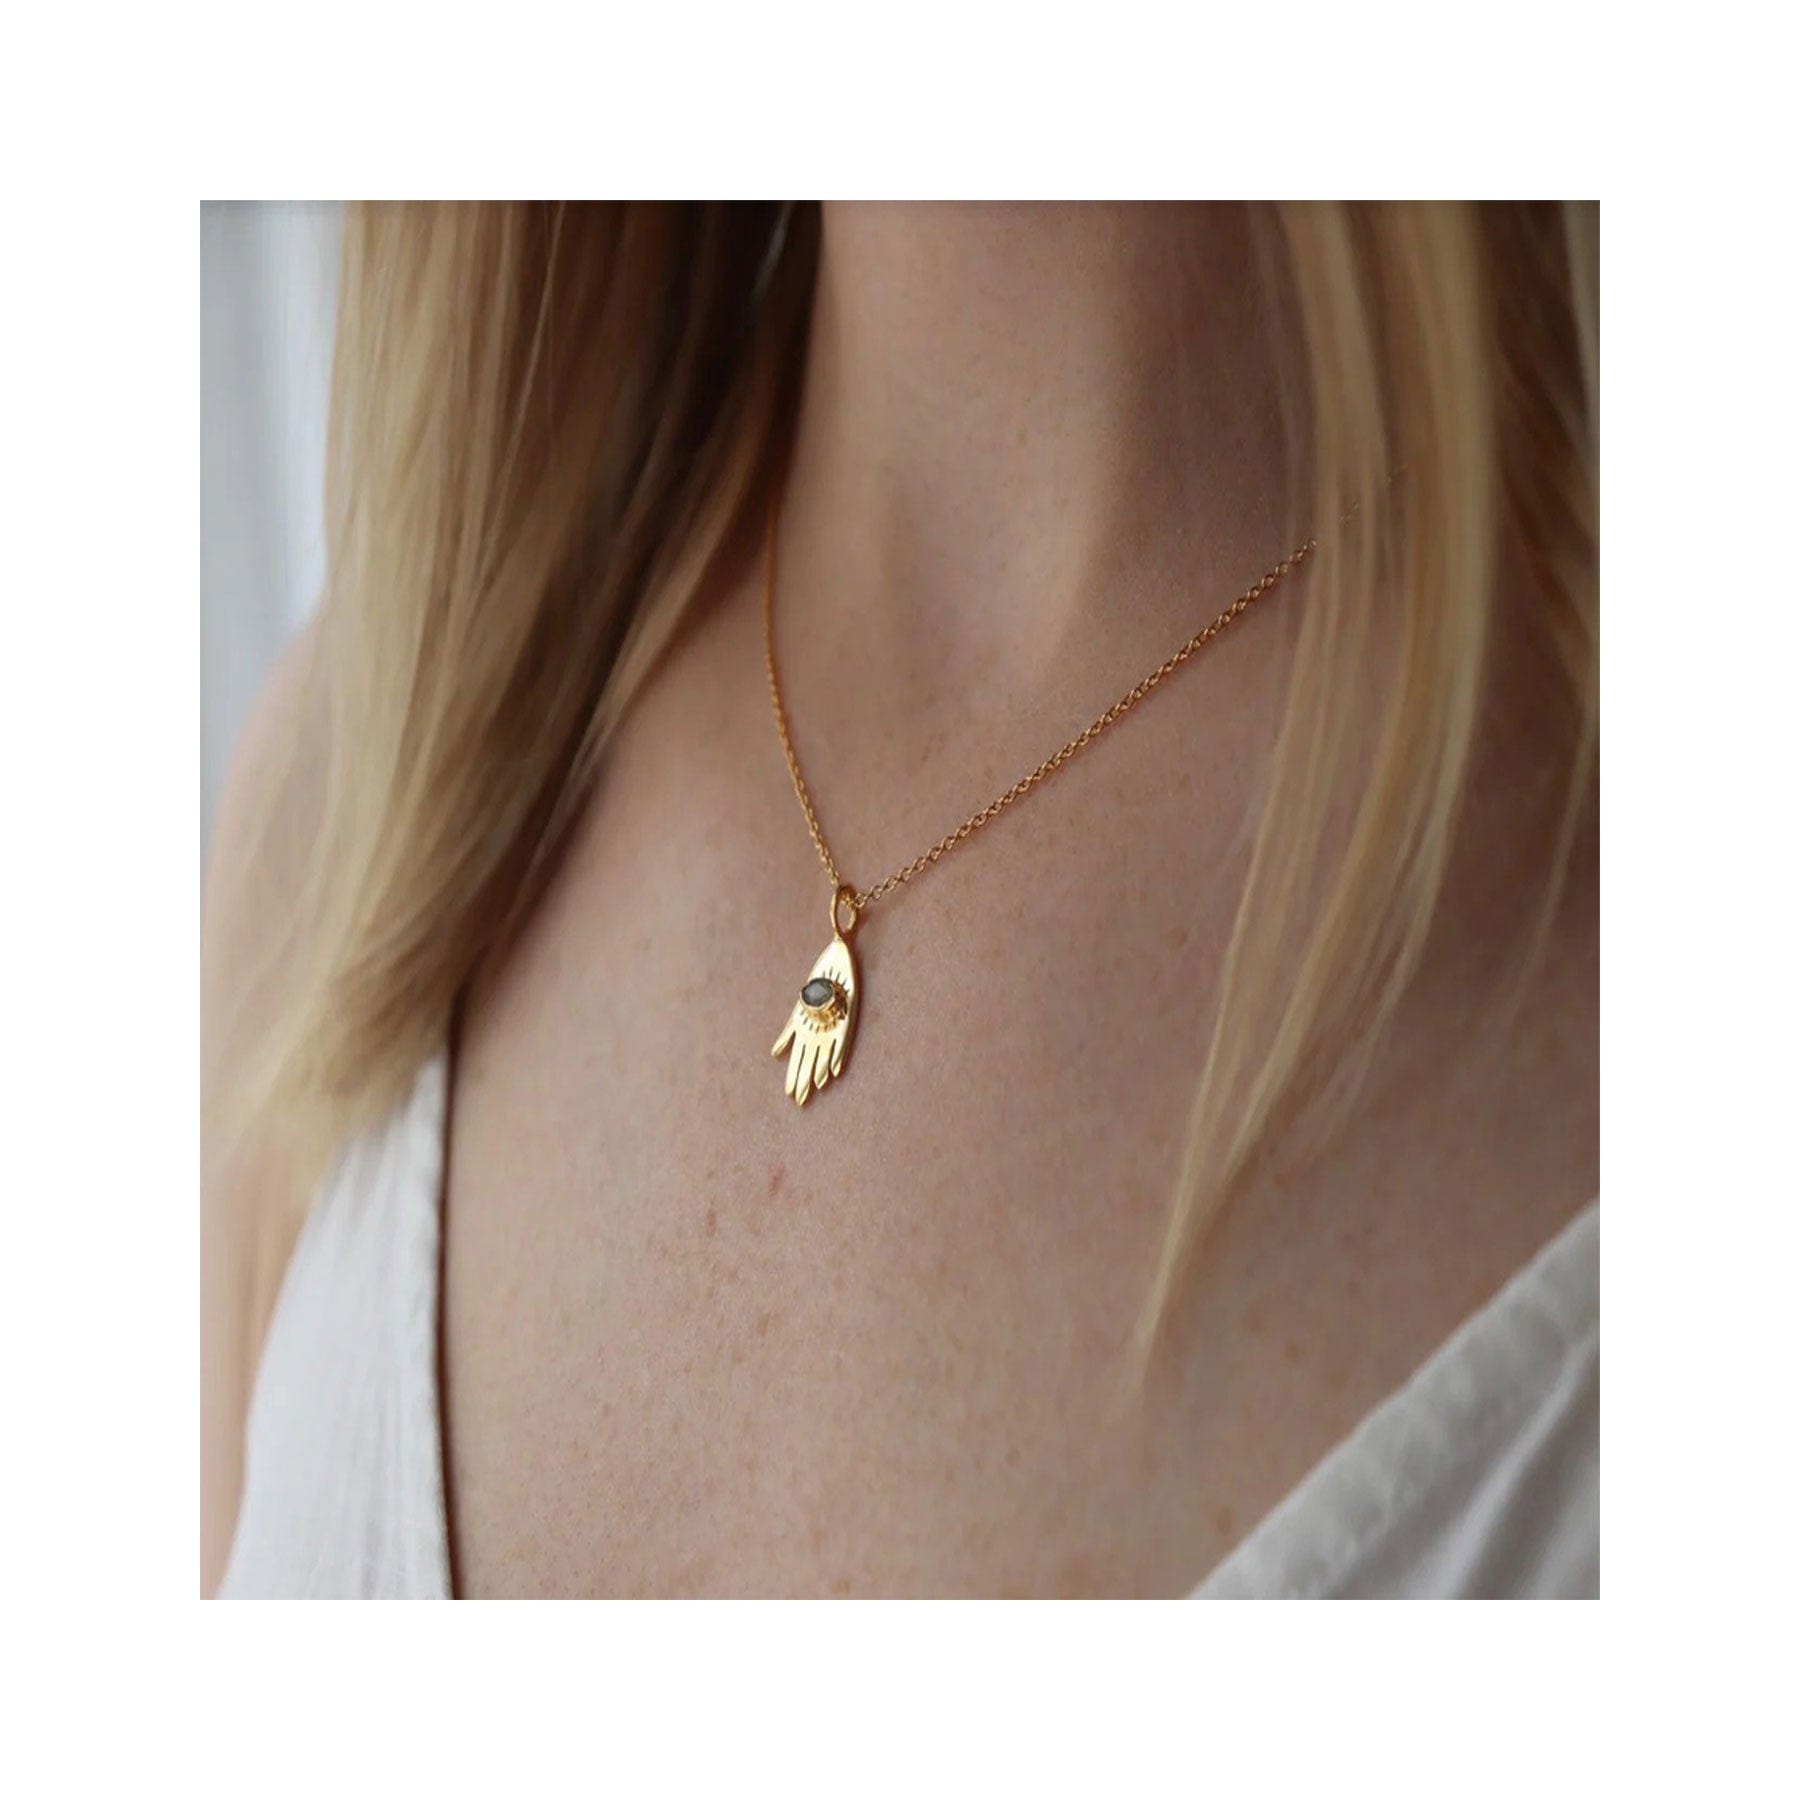 Asha necklace with labradorite stone gold